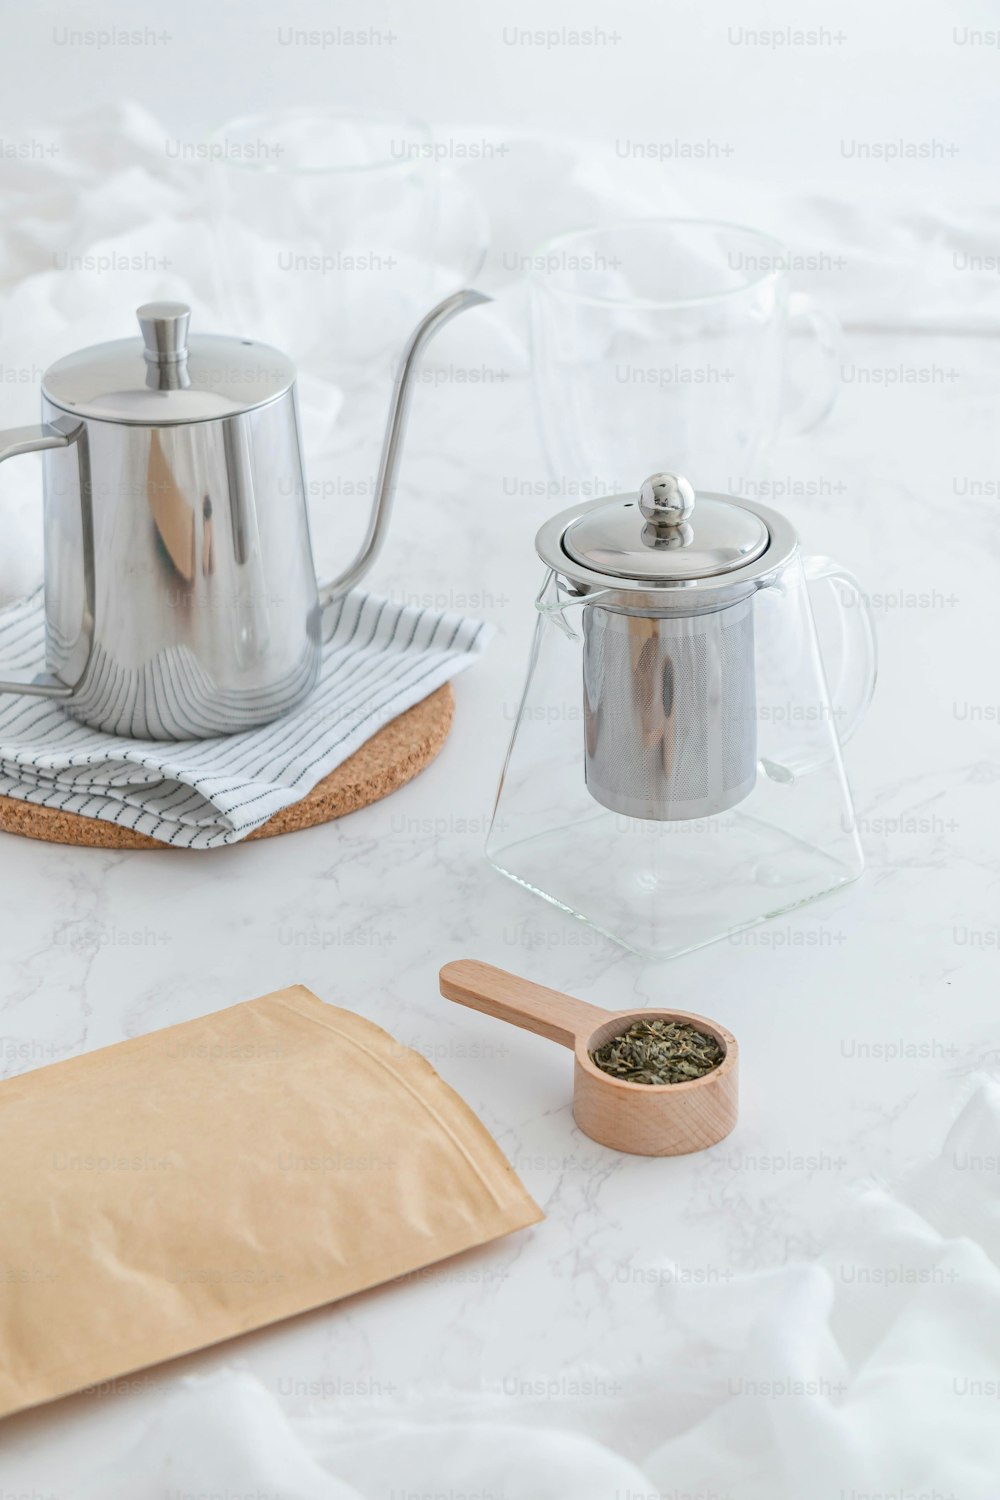 a table with a tea pot, a tea bag, and a wooden spoon